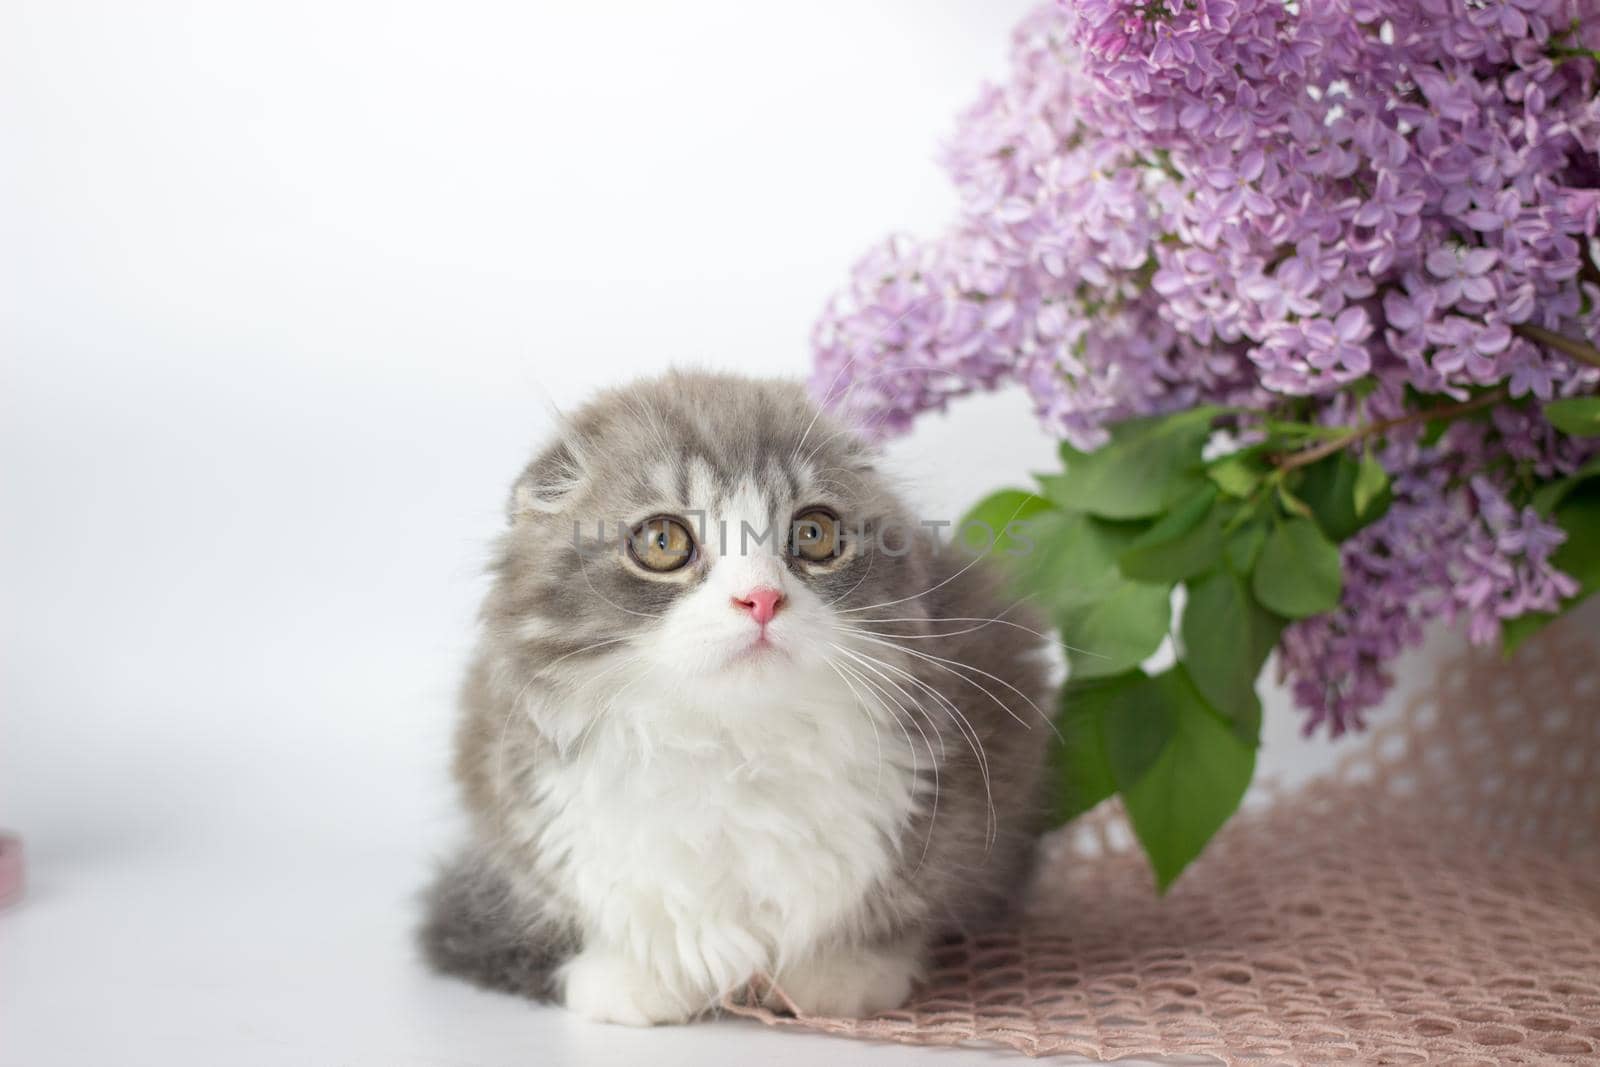 Young scottish highland fold kitten on white and lilac background by KatrinBaidimirova